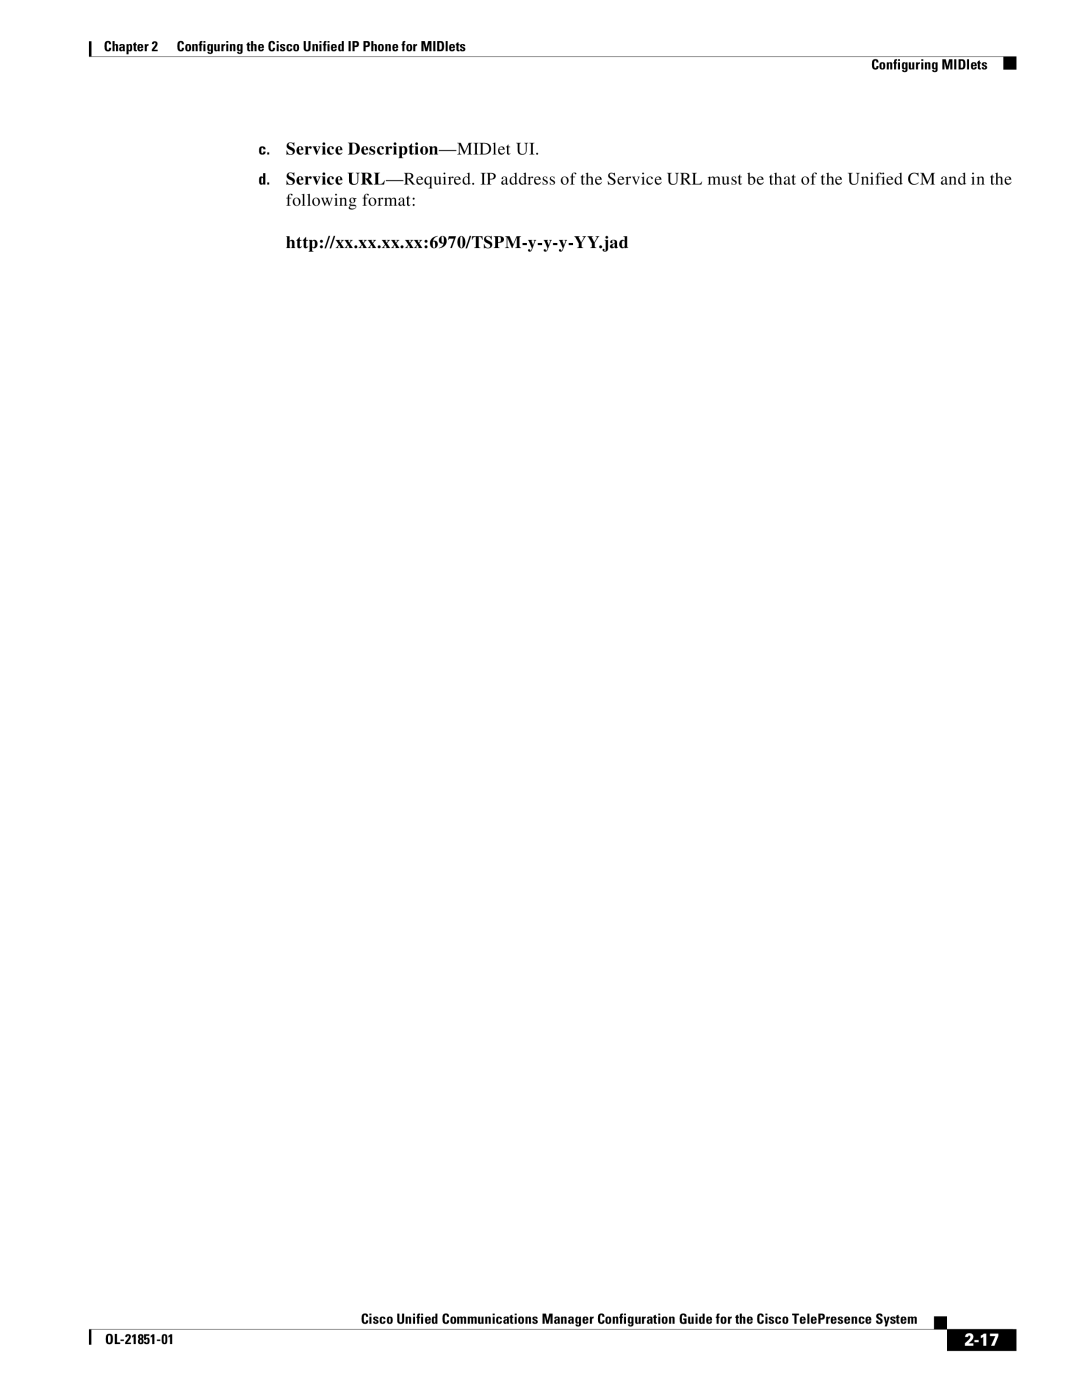 Cisco Systems OL-21851-01 manual Service Description-MIDlet UI 